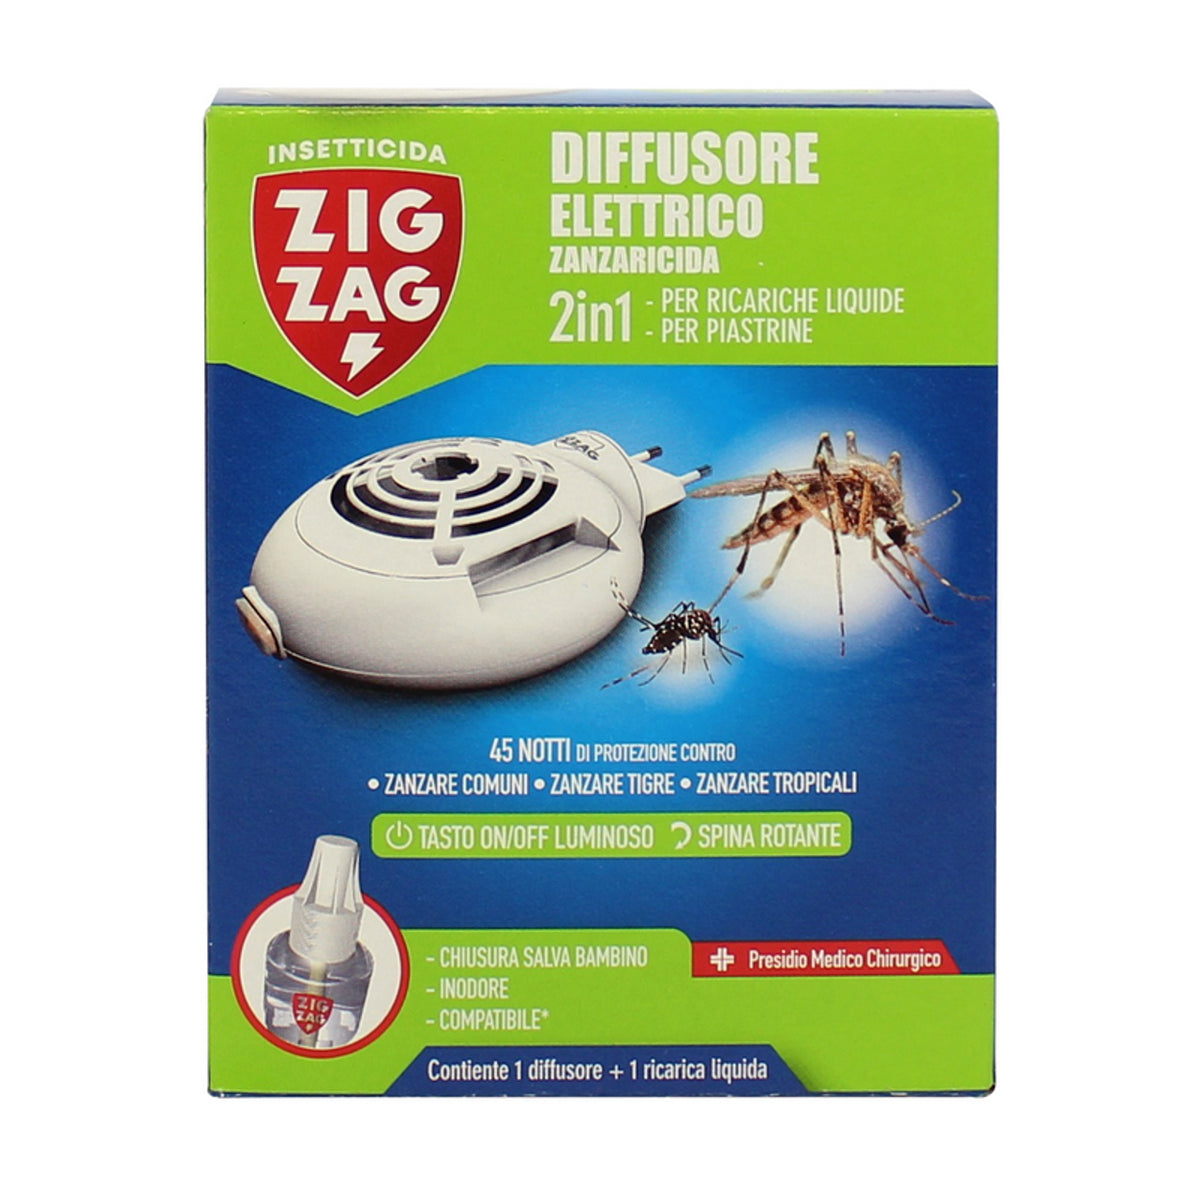 Zig Zag Electrical diffuser + liquid charging 30 ml